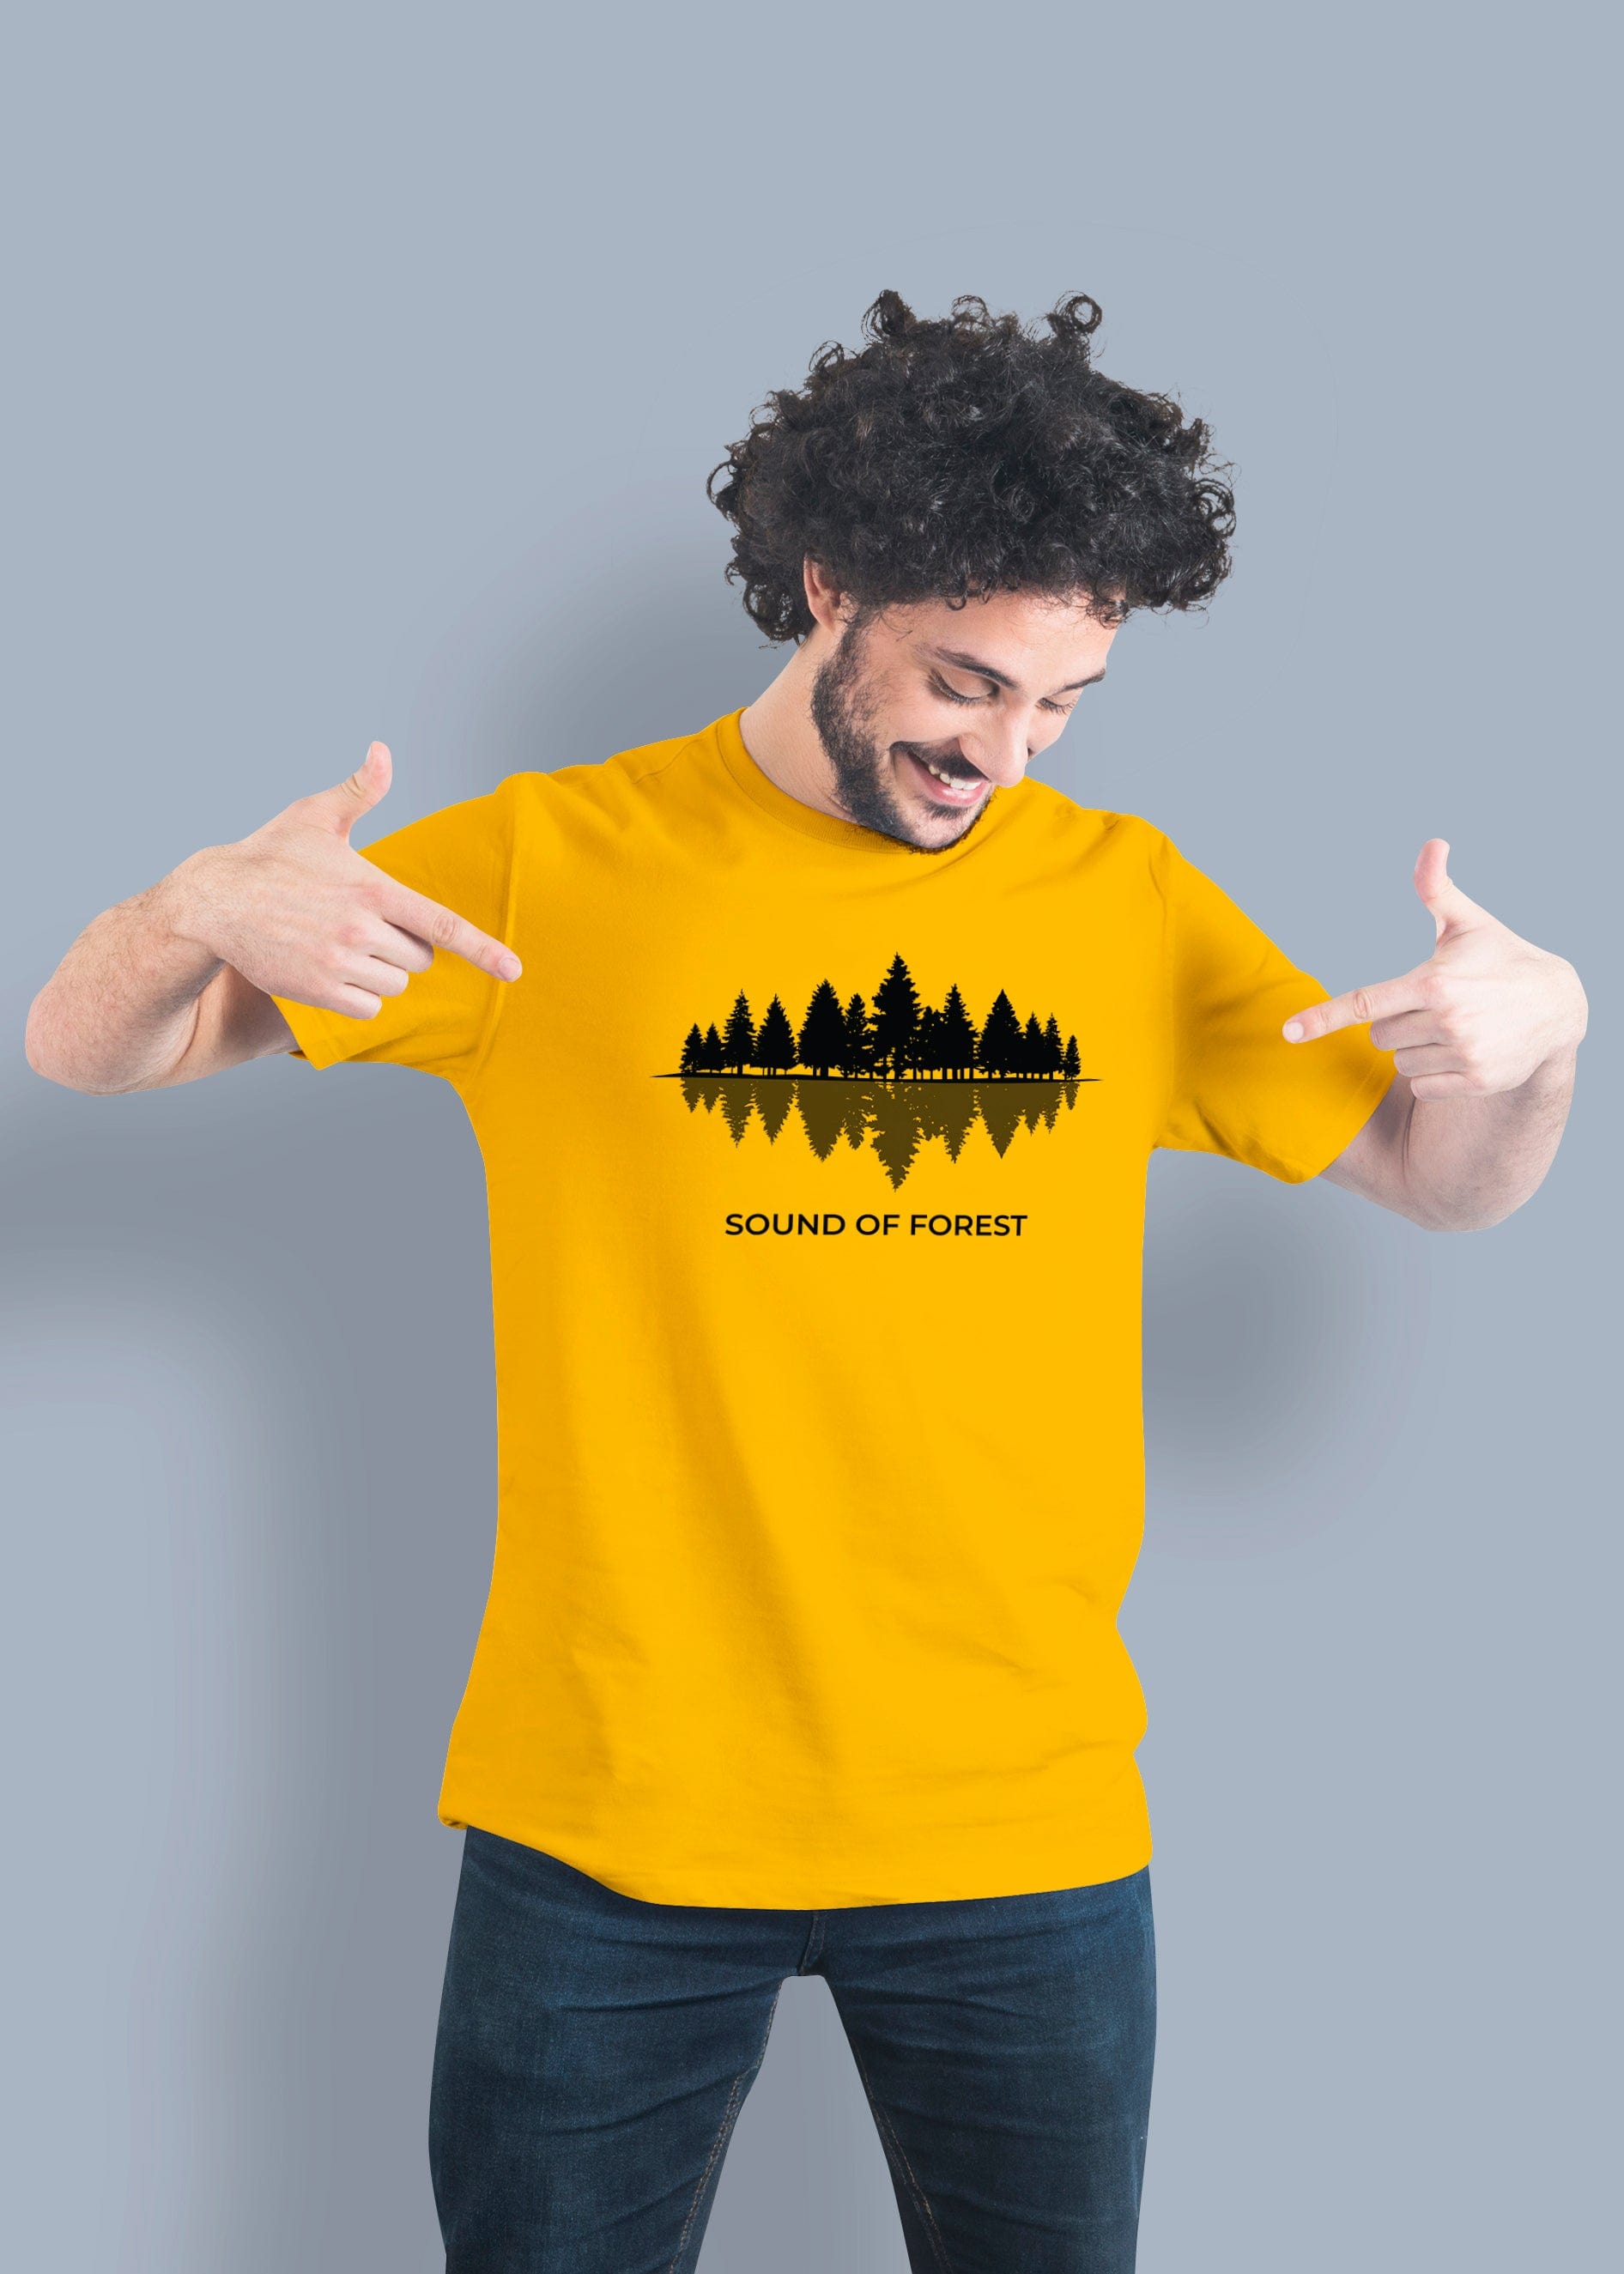 Forest Sound Printed Half Sleeve Premium Cotton T-shirt For Men